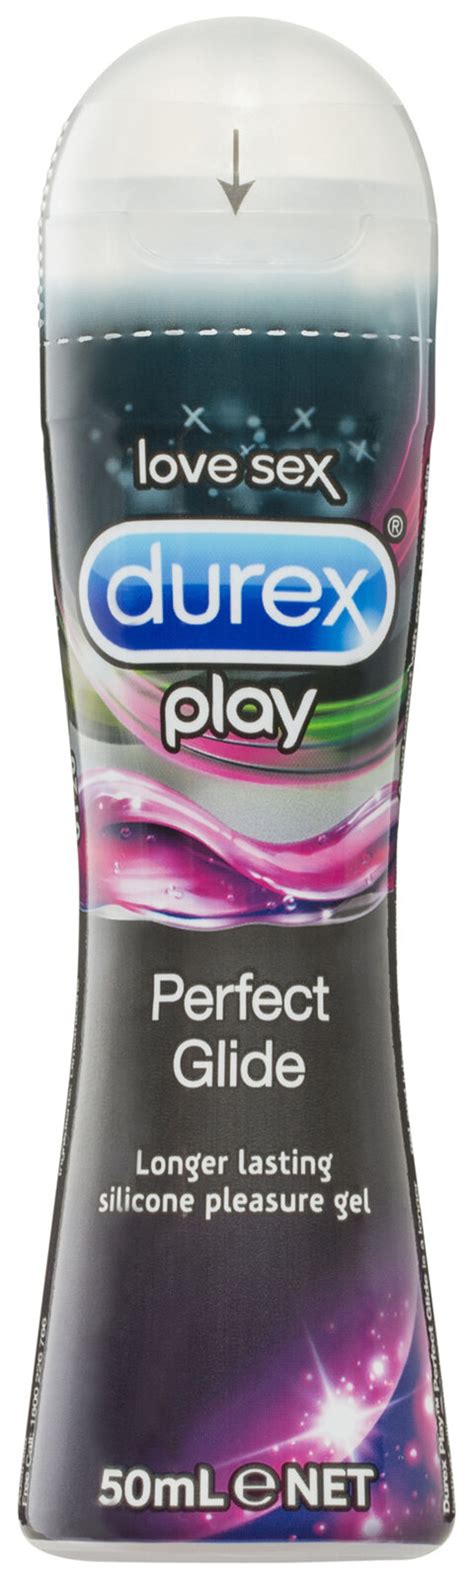 Durex Play Feel Glide Intimate Lubricant 50ml Medicines To Midnight